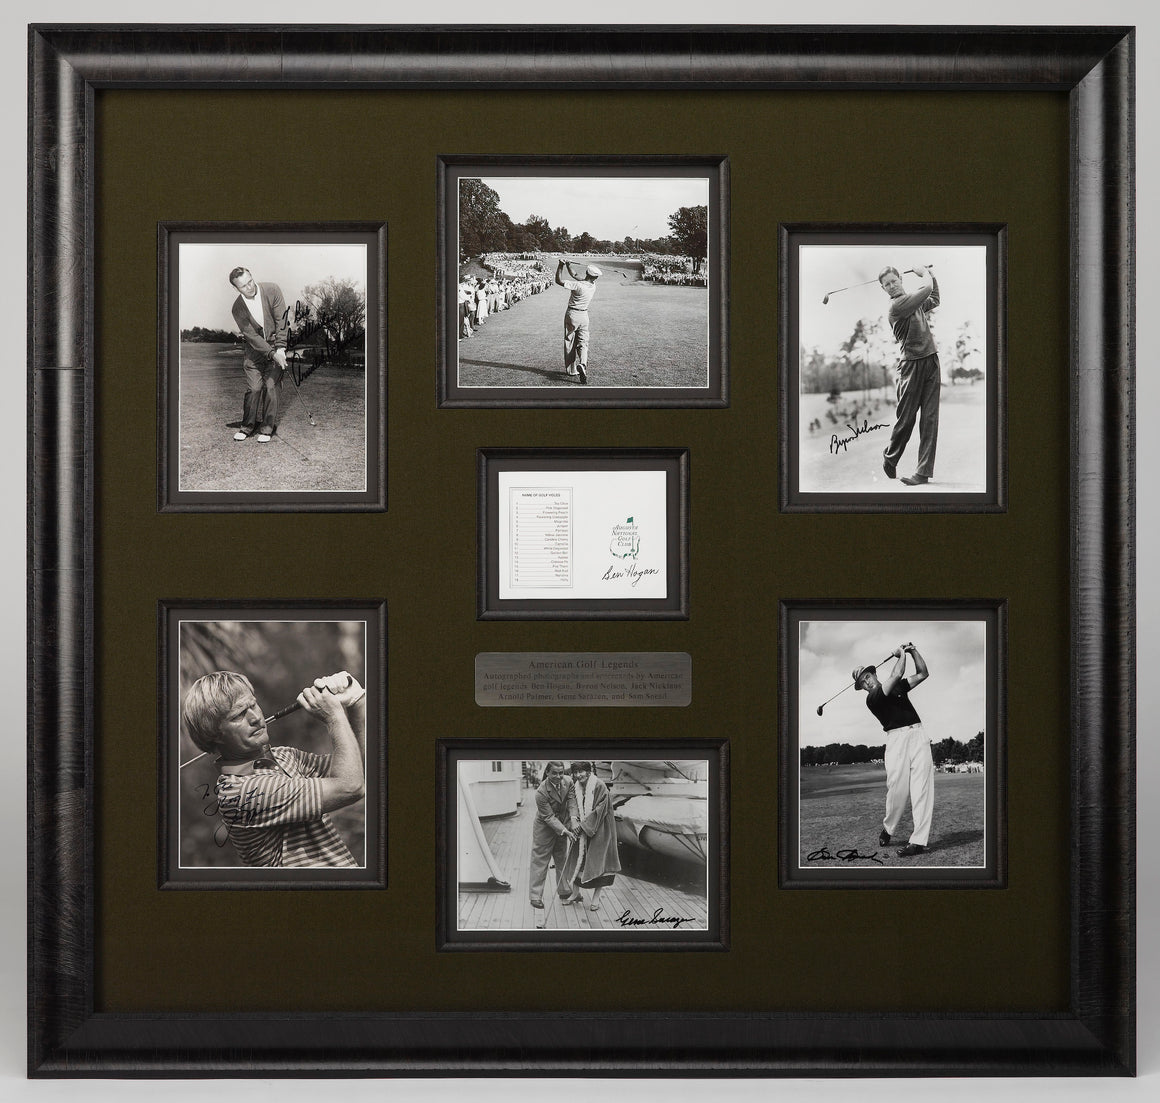 American Golf Legends Signature Collage